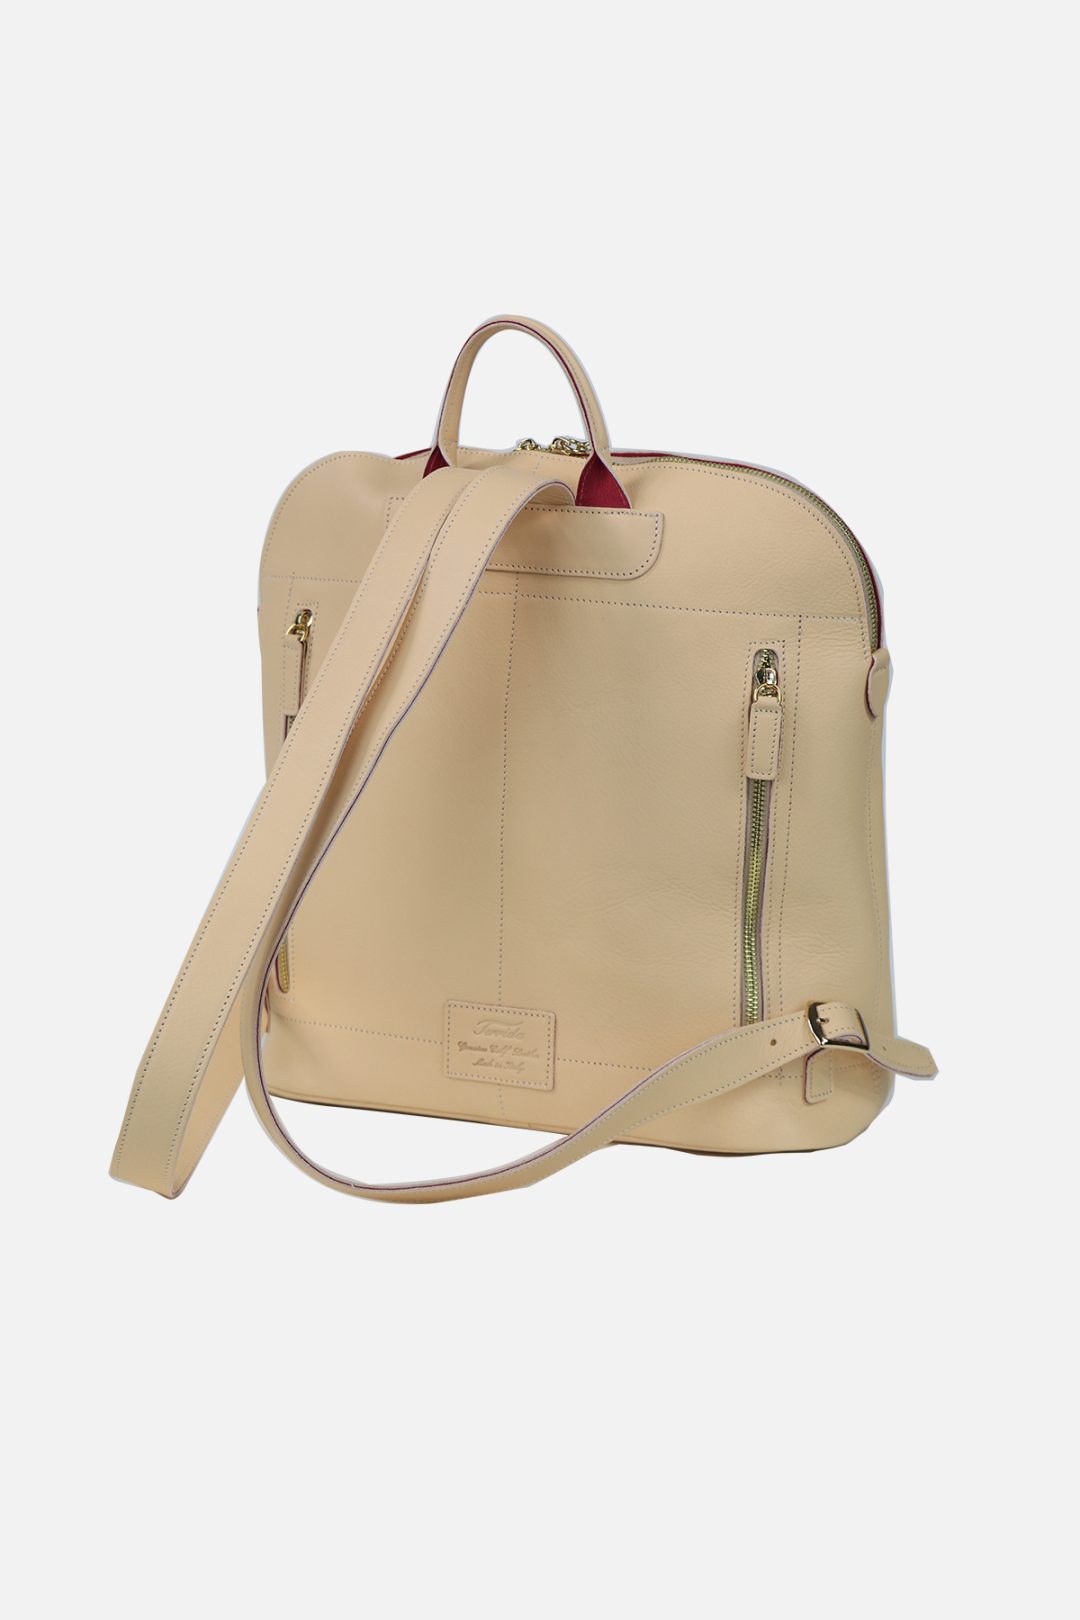 Laptop Backpack Terrida - Handmade in Italy, vegetable tan leather